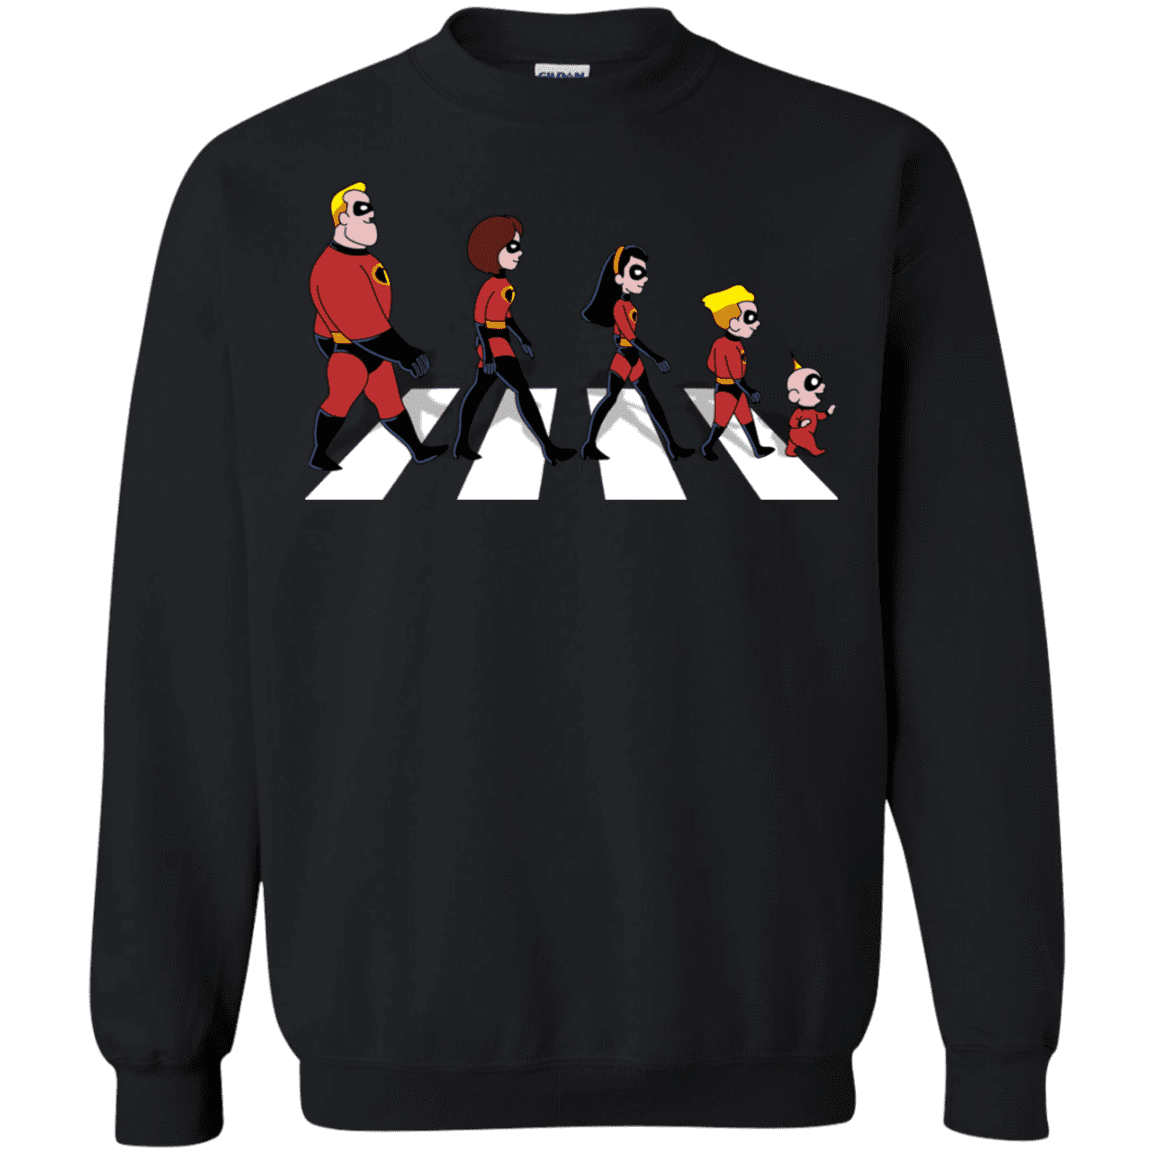 Sweatshirts Black / S The Supers Crewneck Sweatshirt